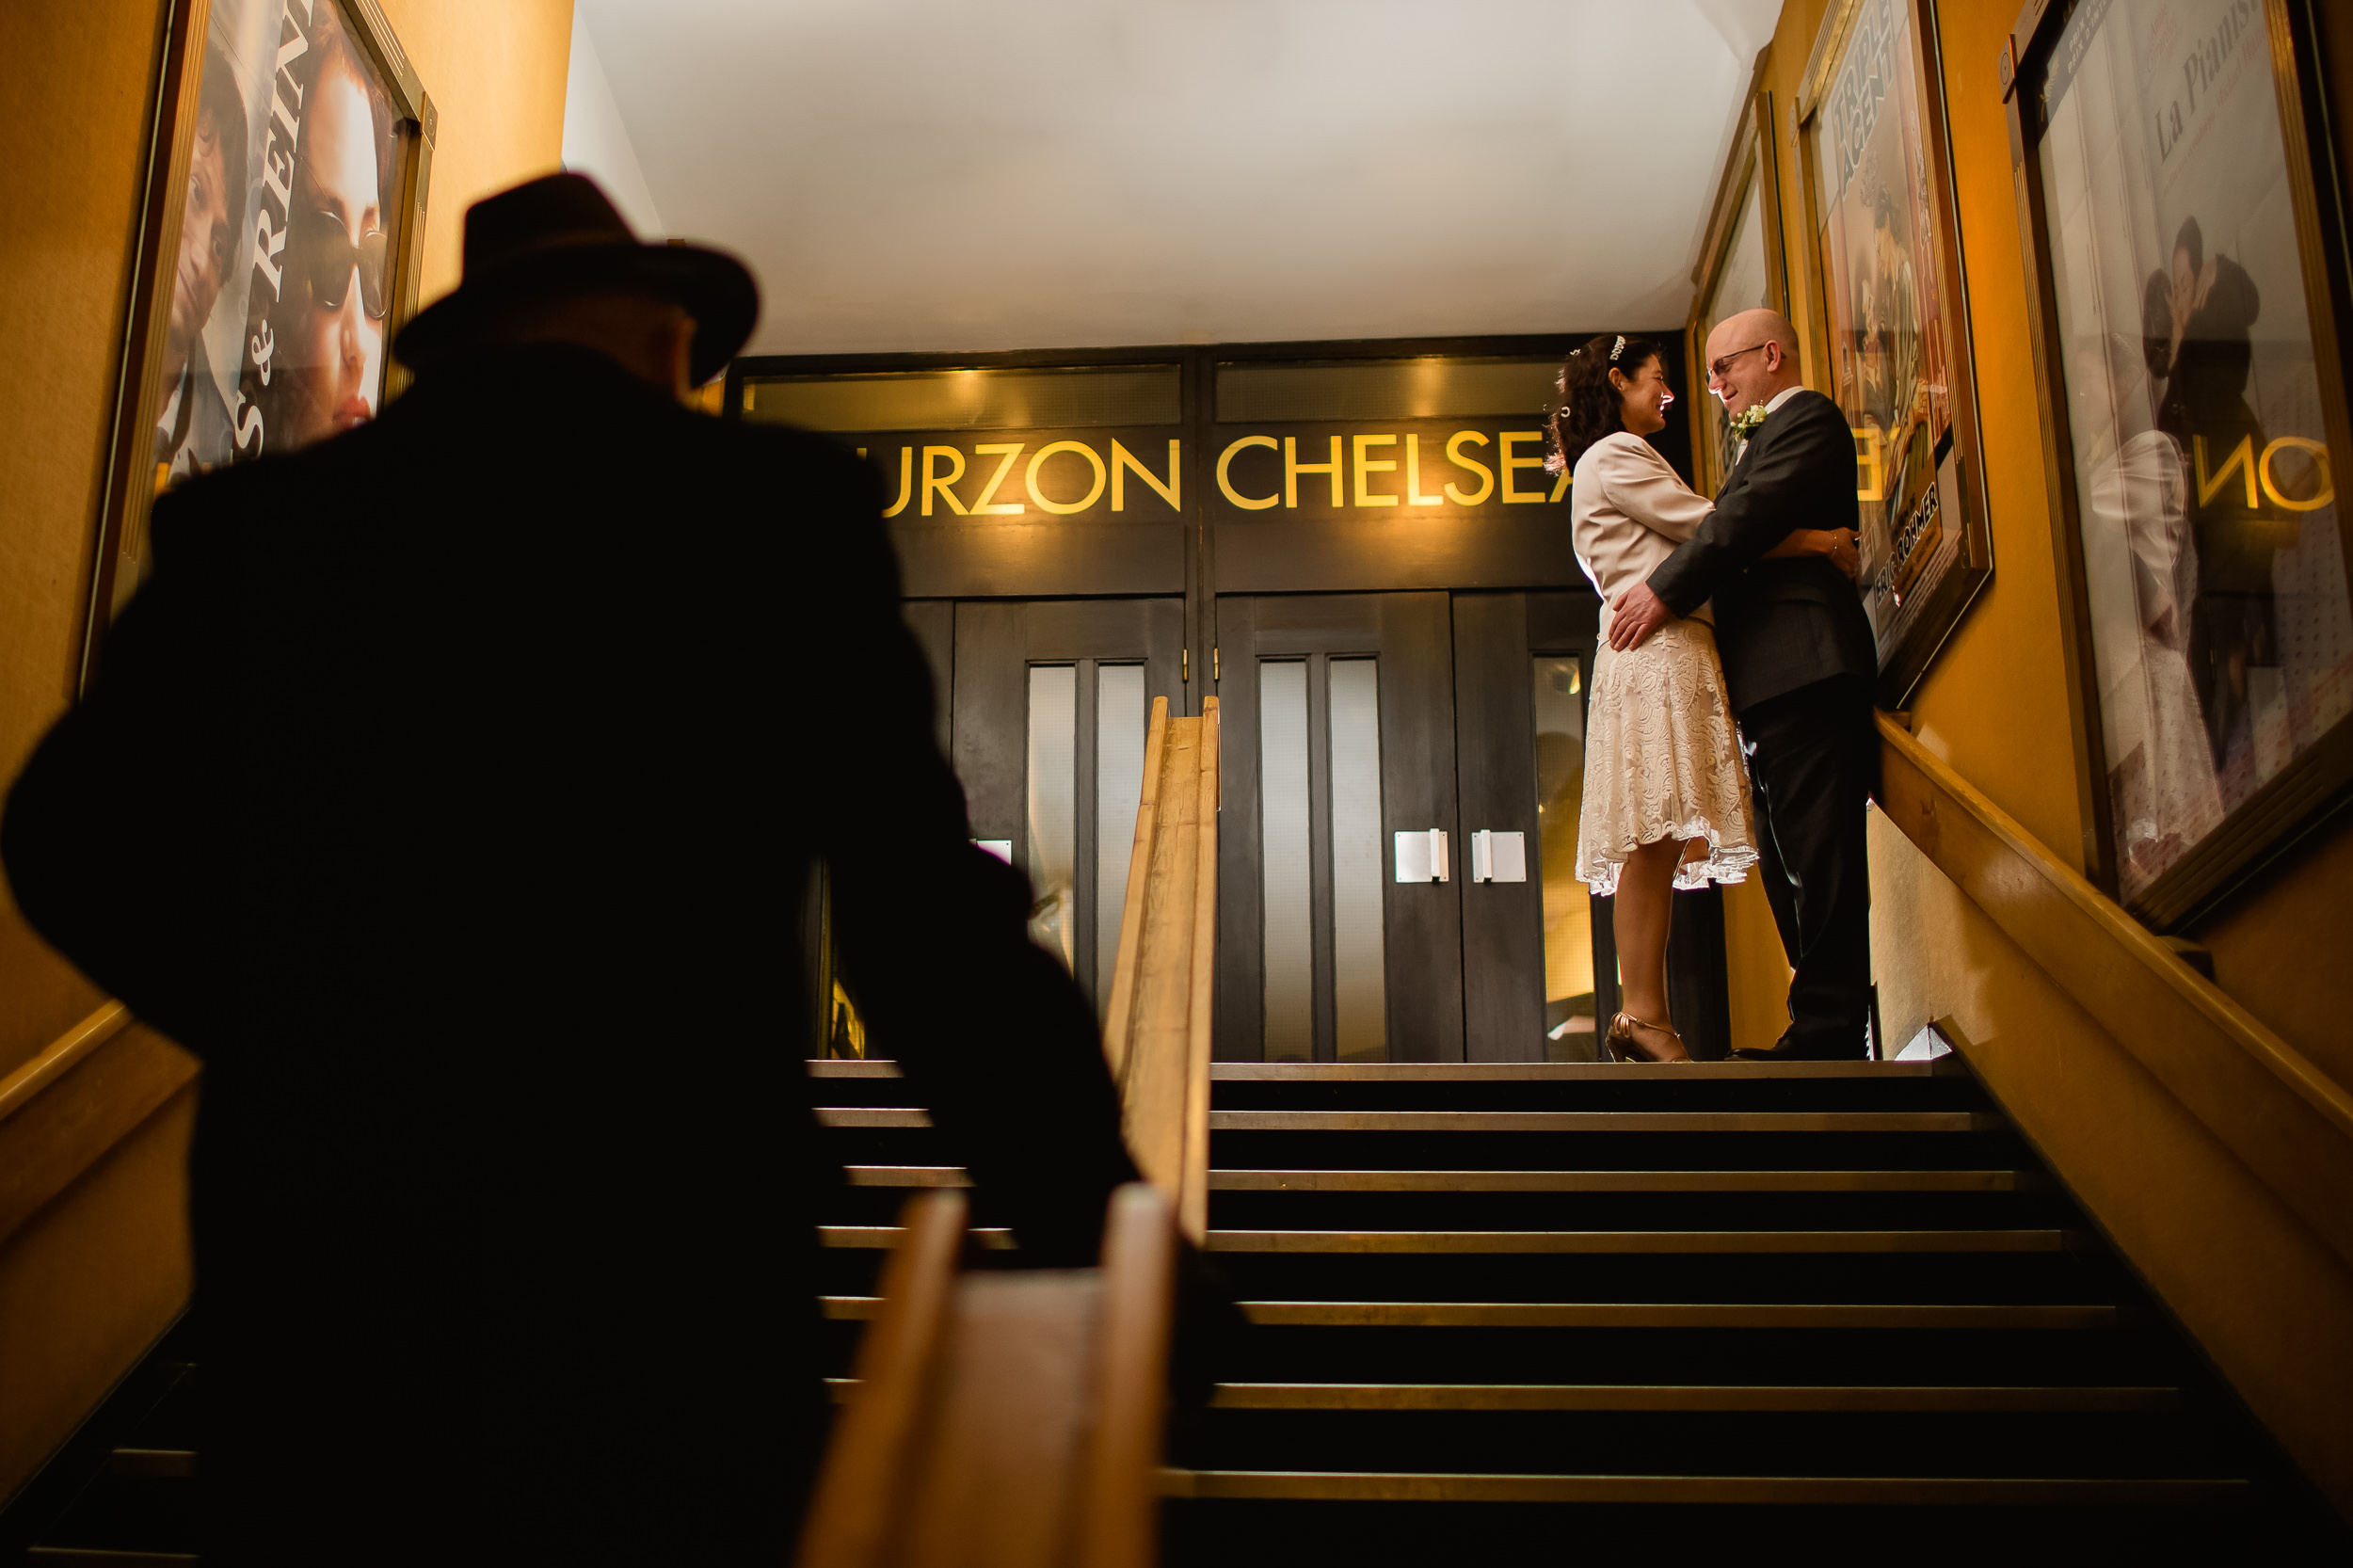 Bride and groom in a cinema chelsea London - Curzon london wedding - Kings road London wedding